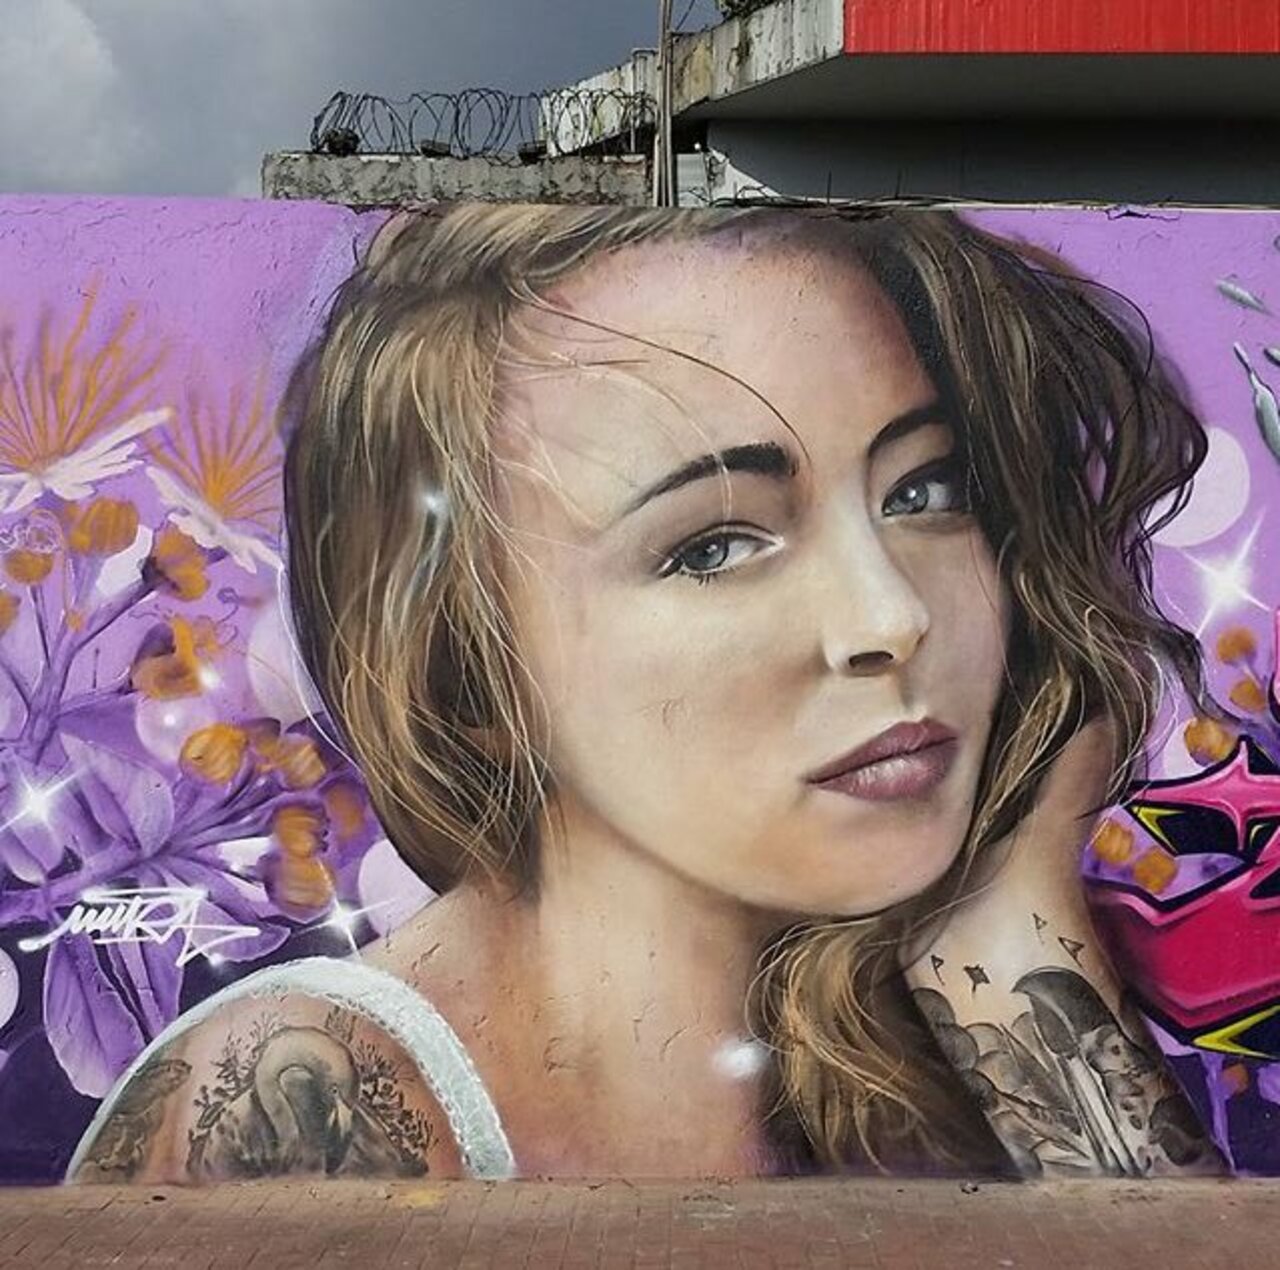 New Street Art by Mantarea 

#art #graffiti #mural #streetart https://t.co/AVmb3oAd10